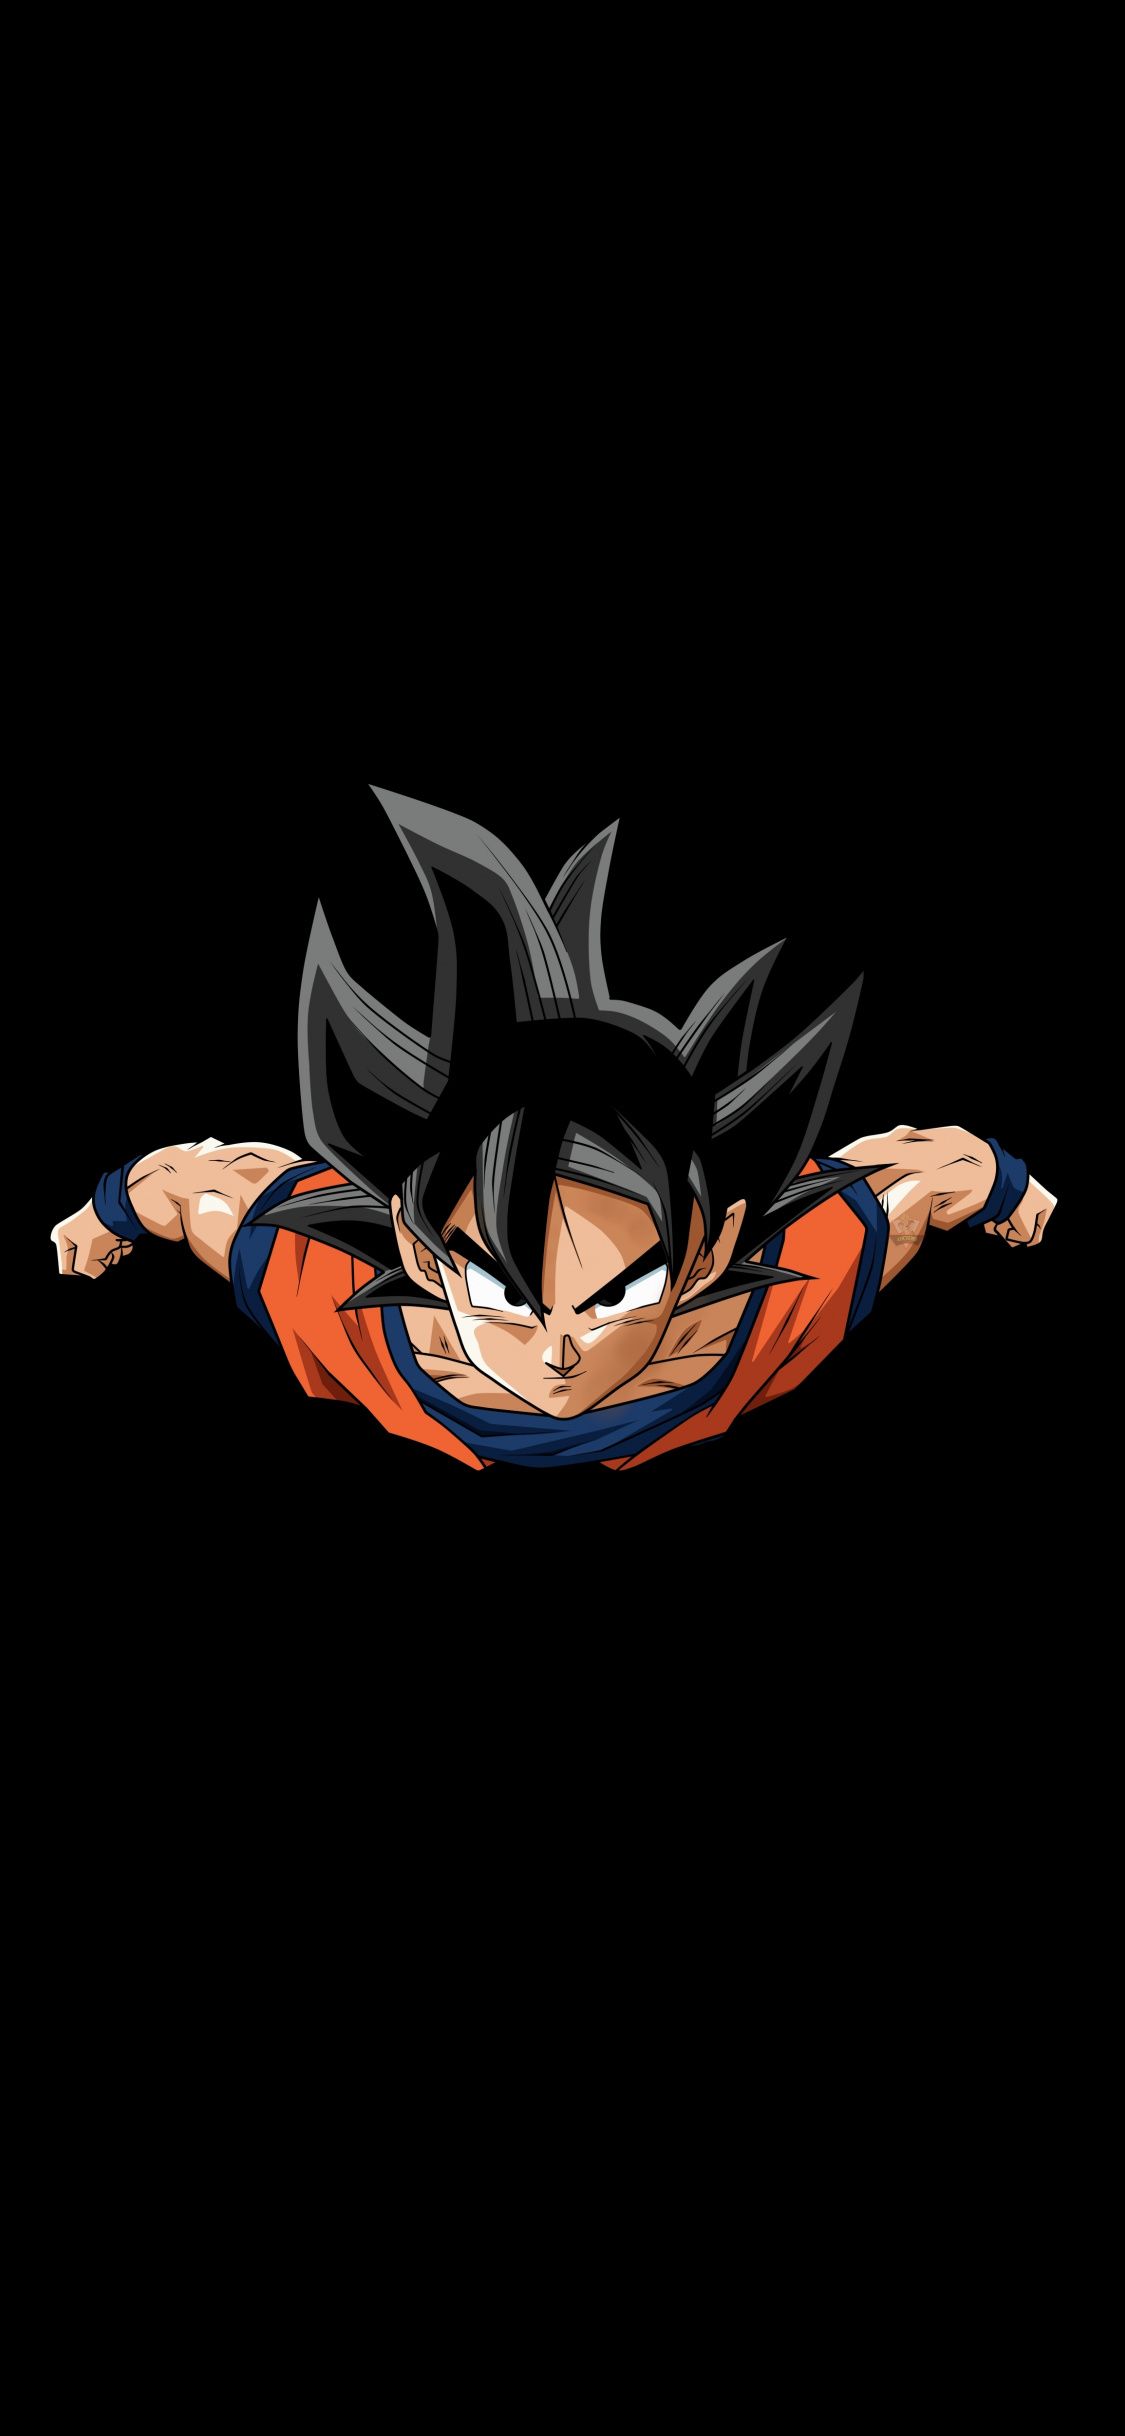 Goku, anime boy, jump, artwork wallpaper, 3330x HD image, picture, 1d578b3f